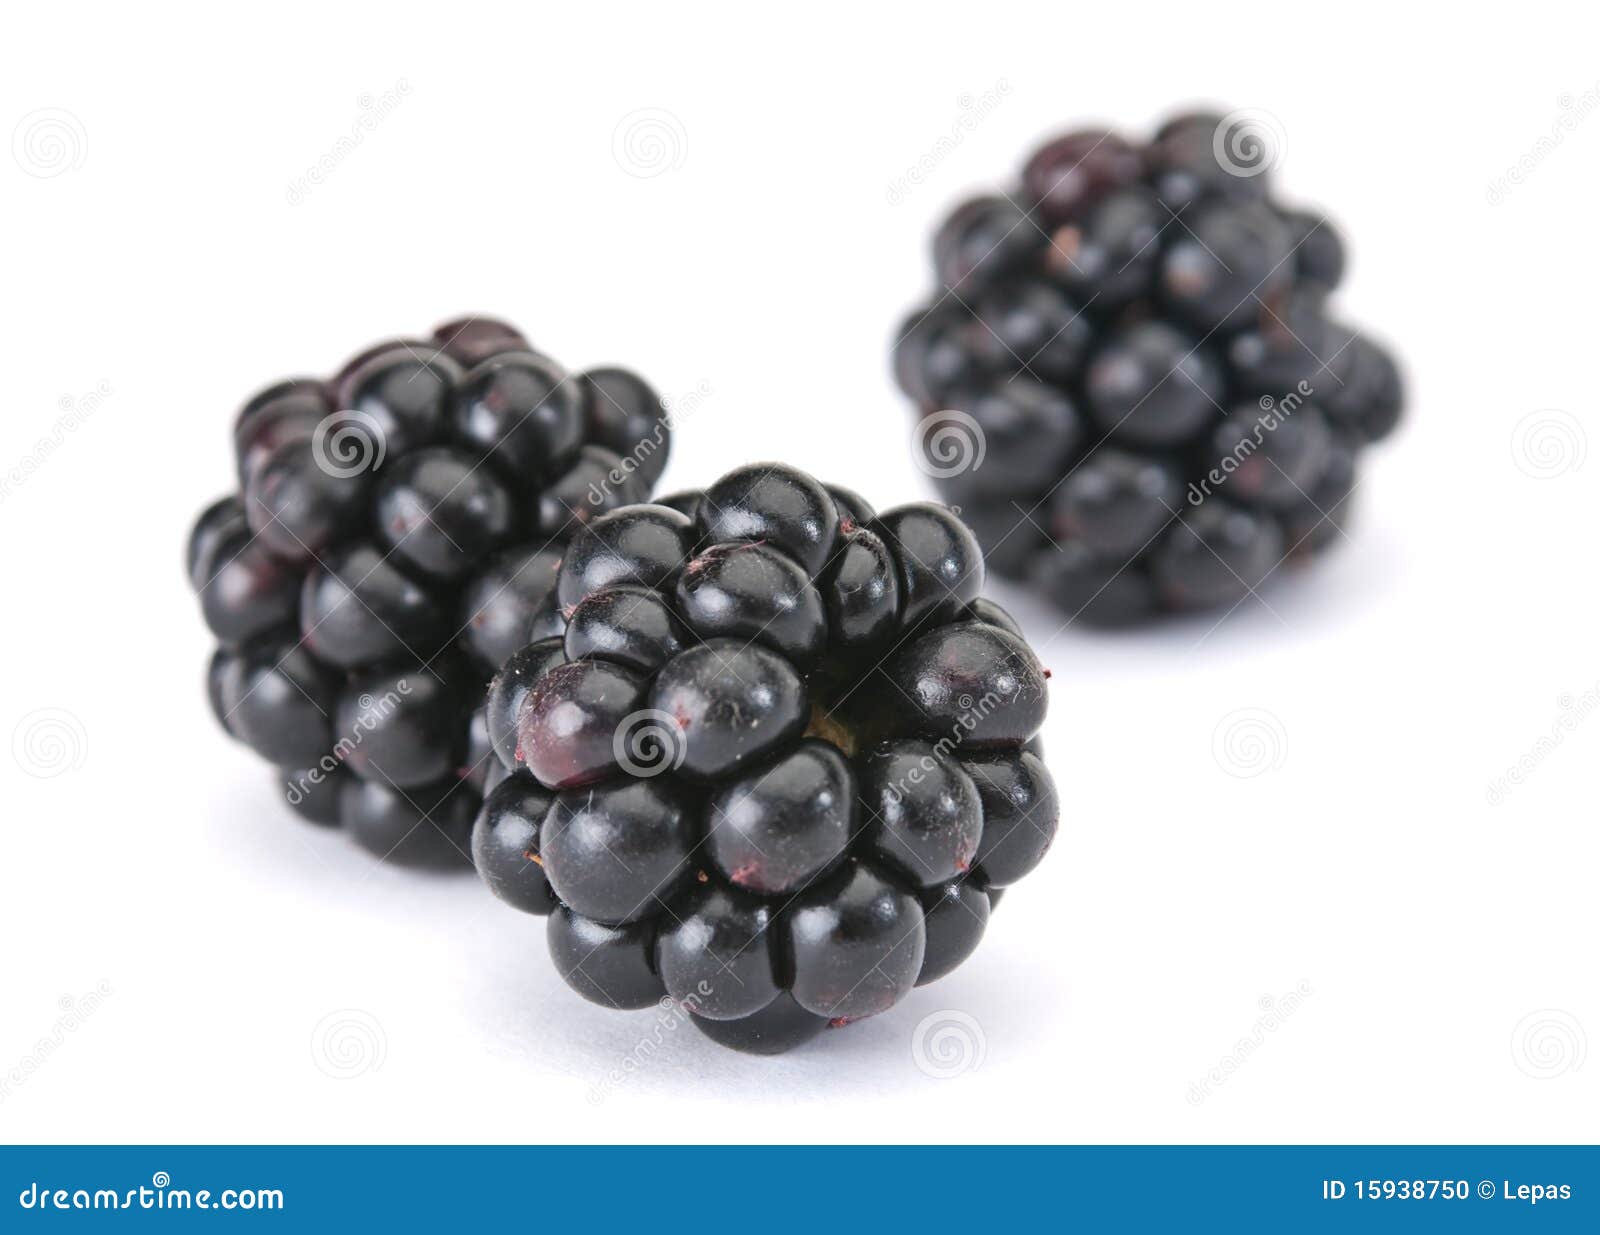 Blackberry berry stock photo. Image of sweet, ripe, white - 15938750